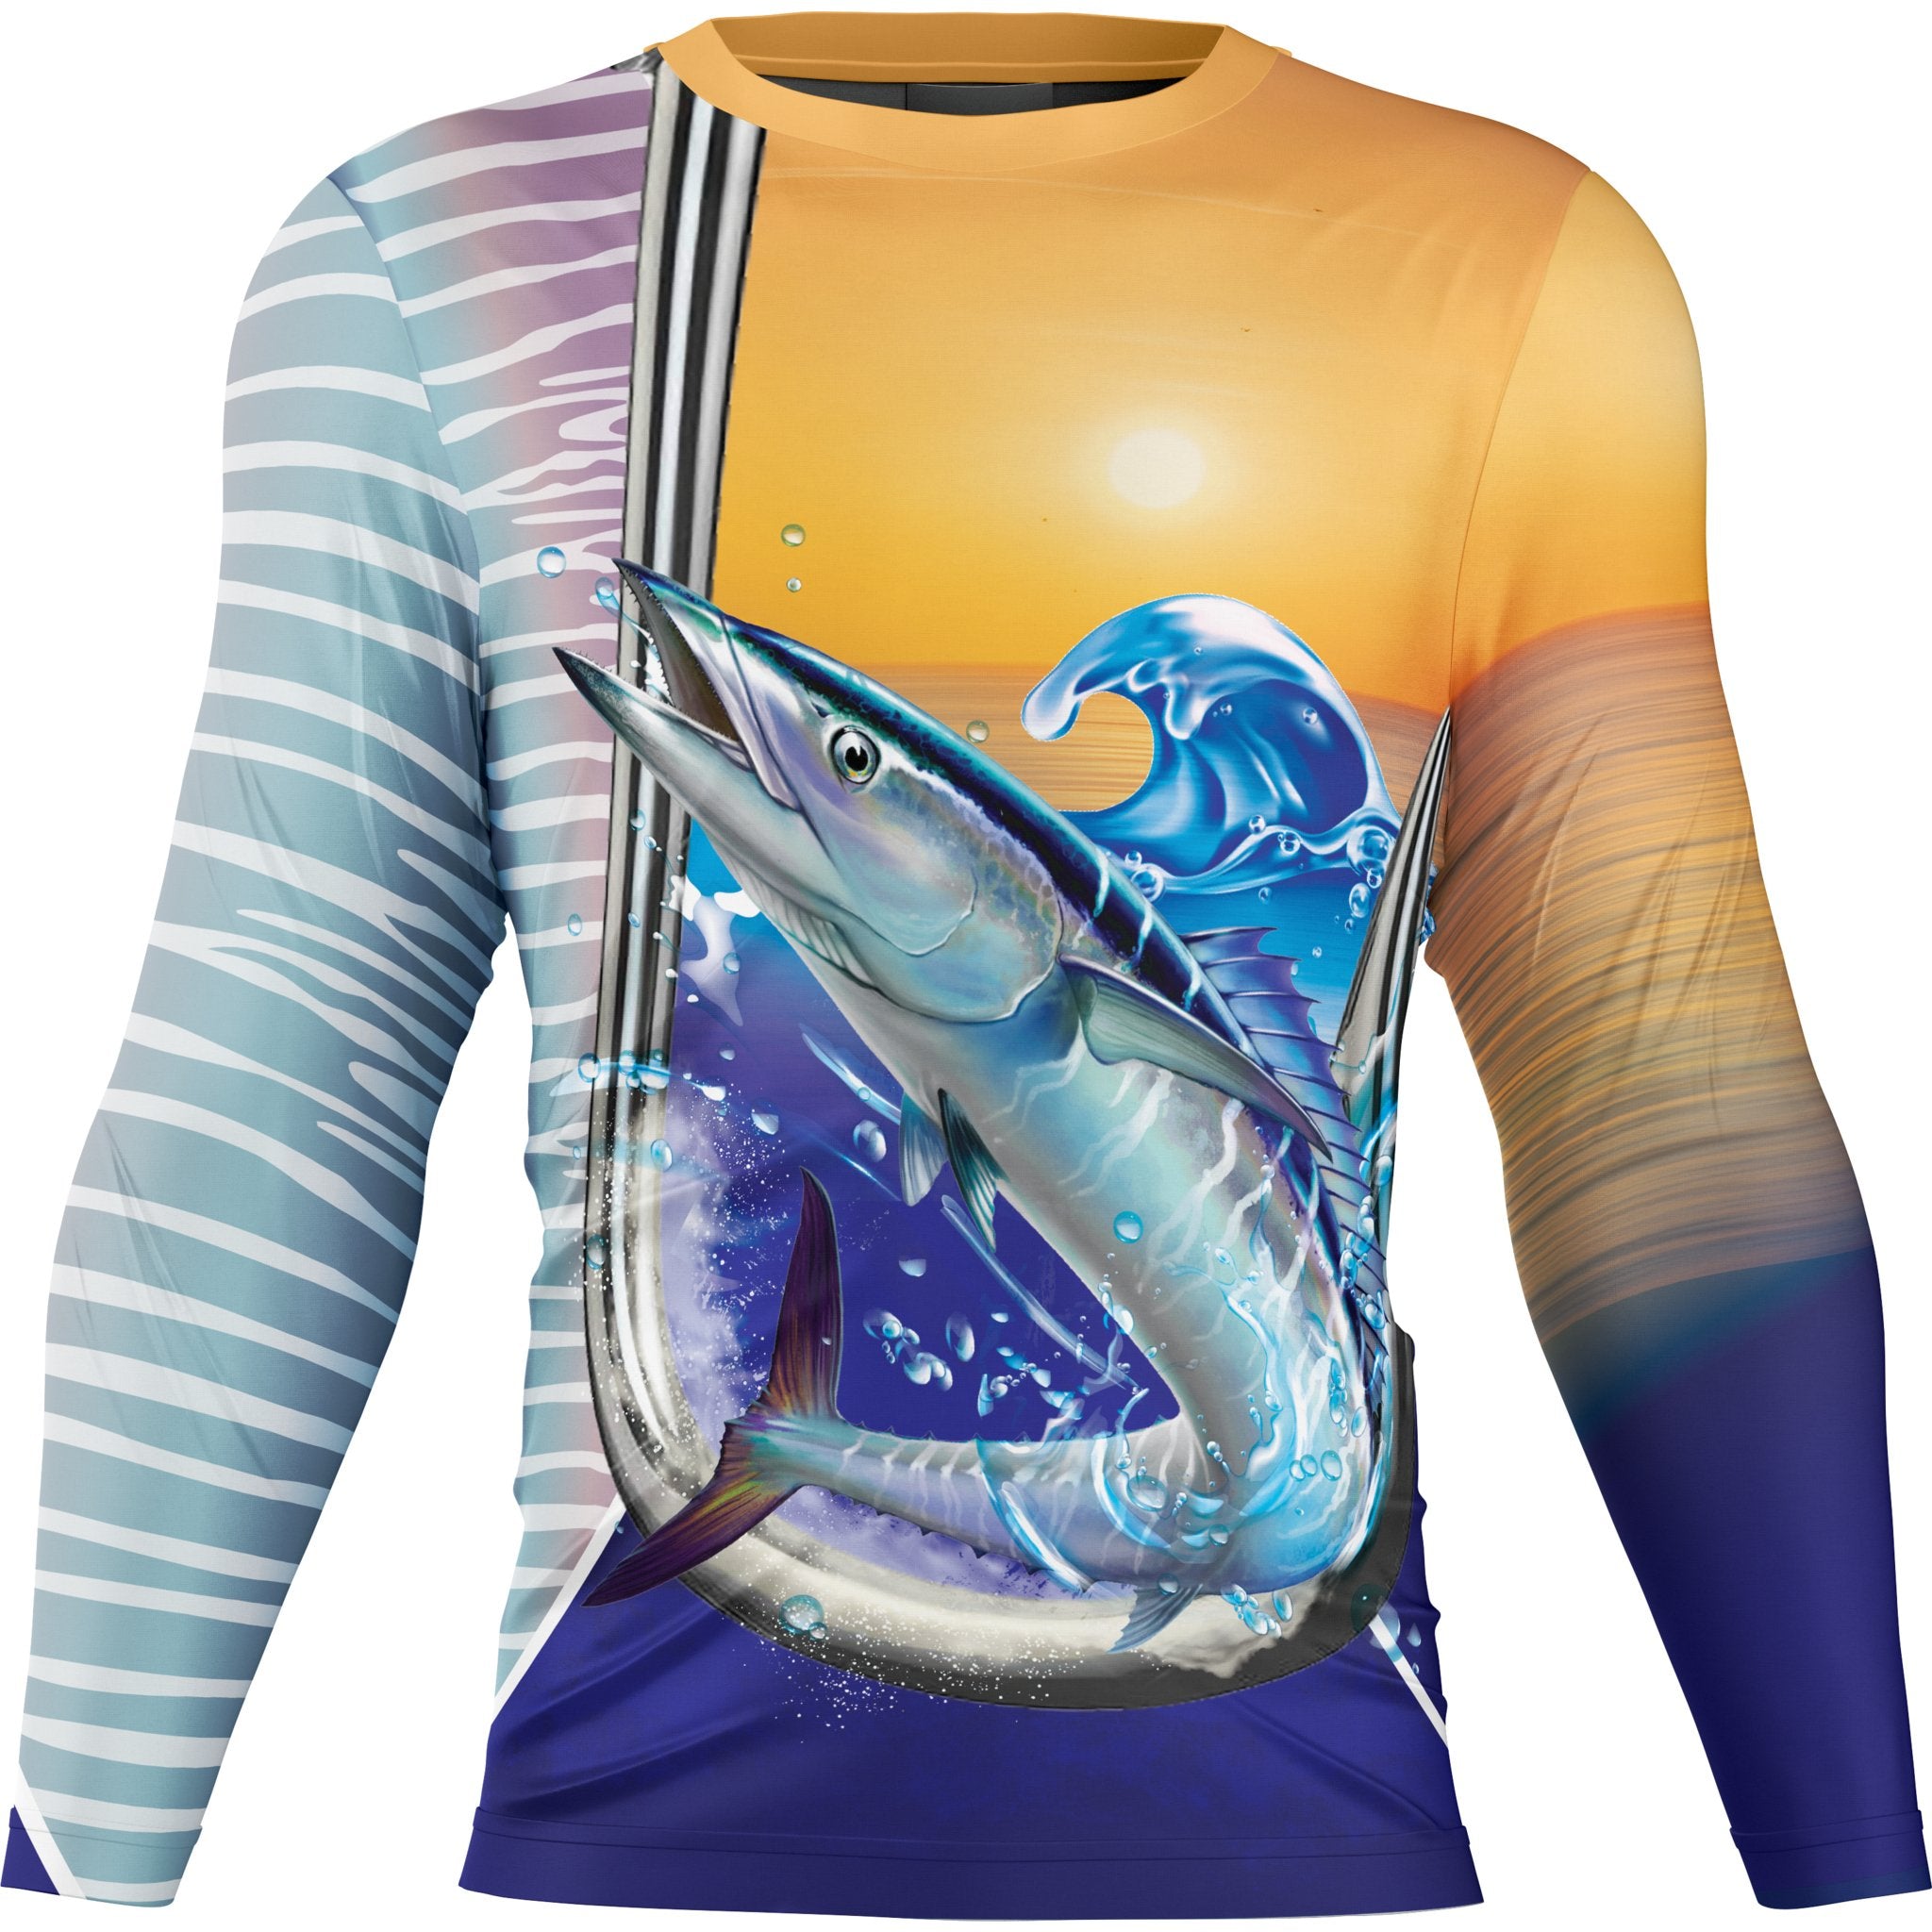 Blue Marlin Fishing makes me happy - UPF 50+ Long Sleeve Shirt